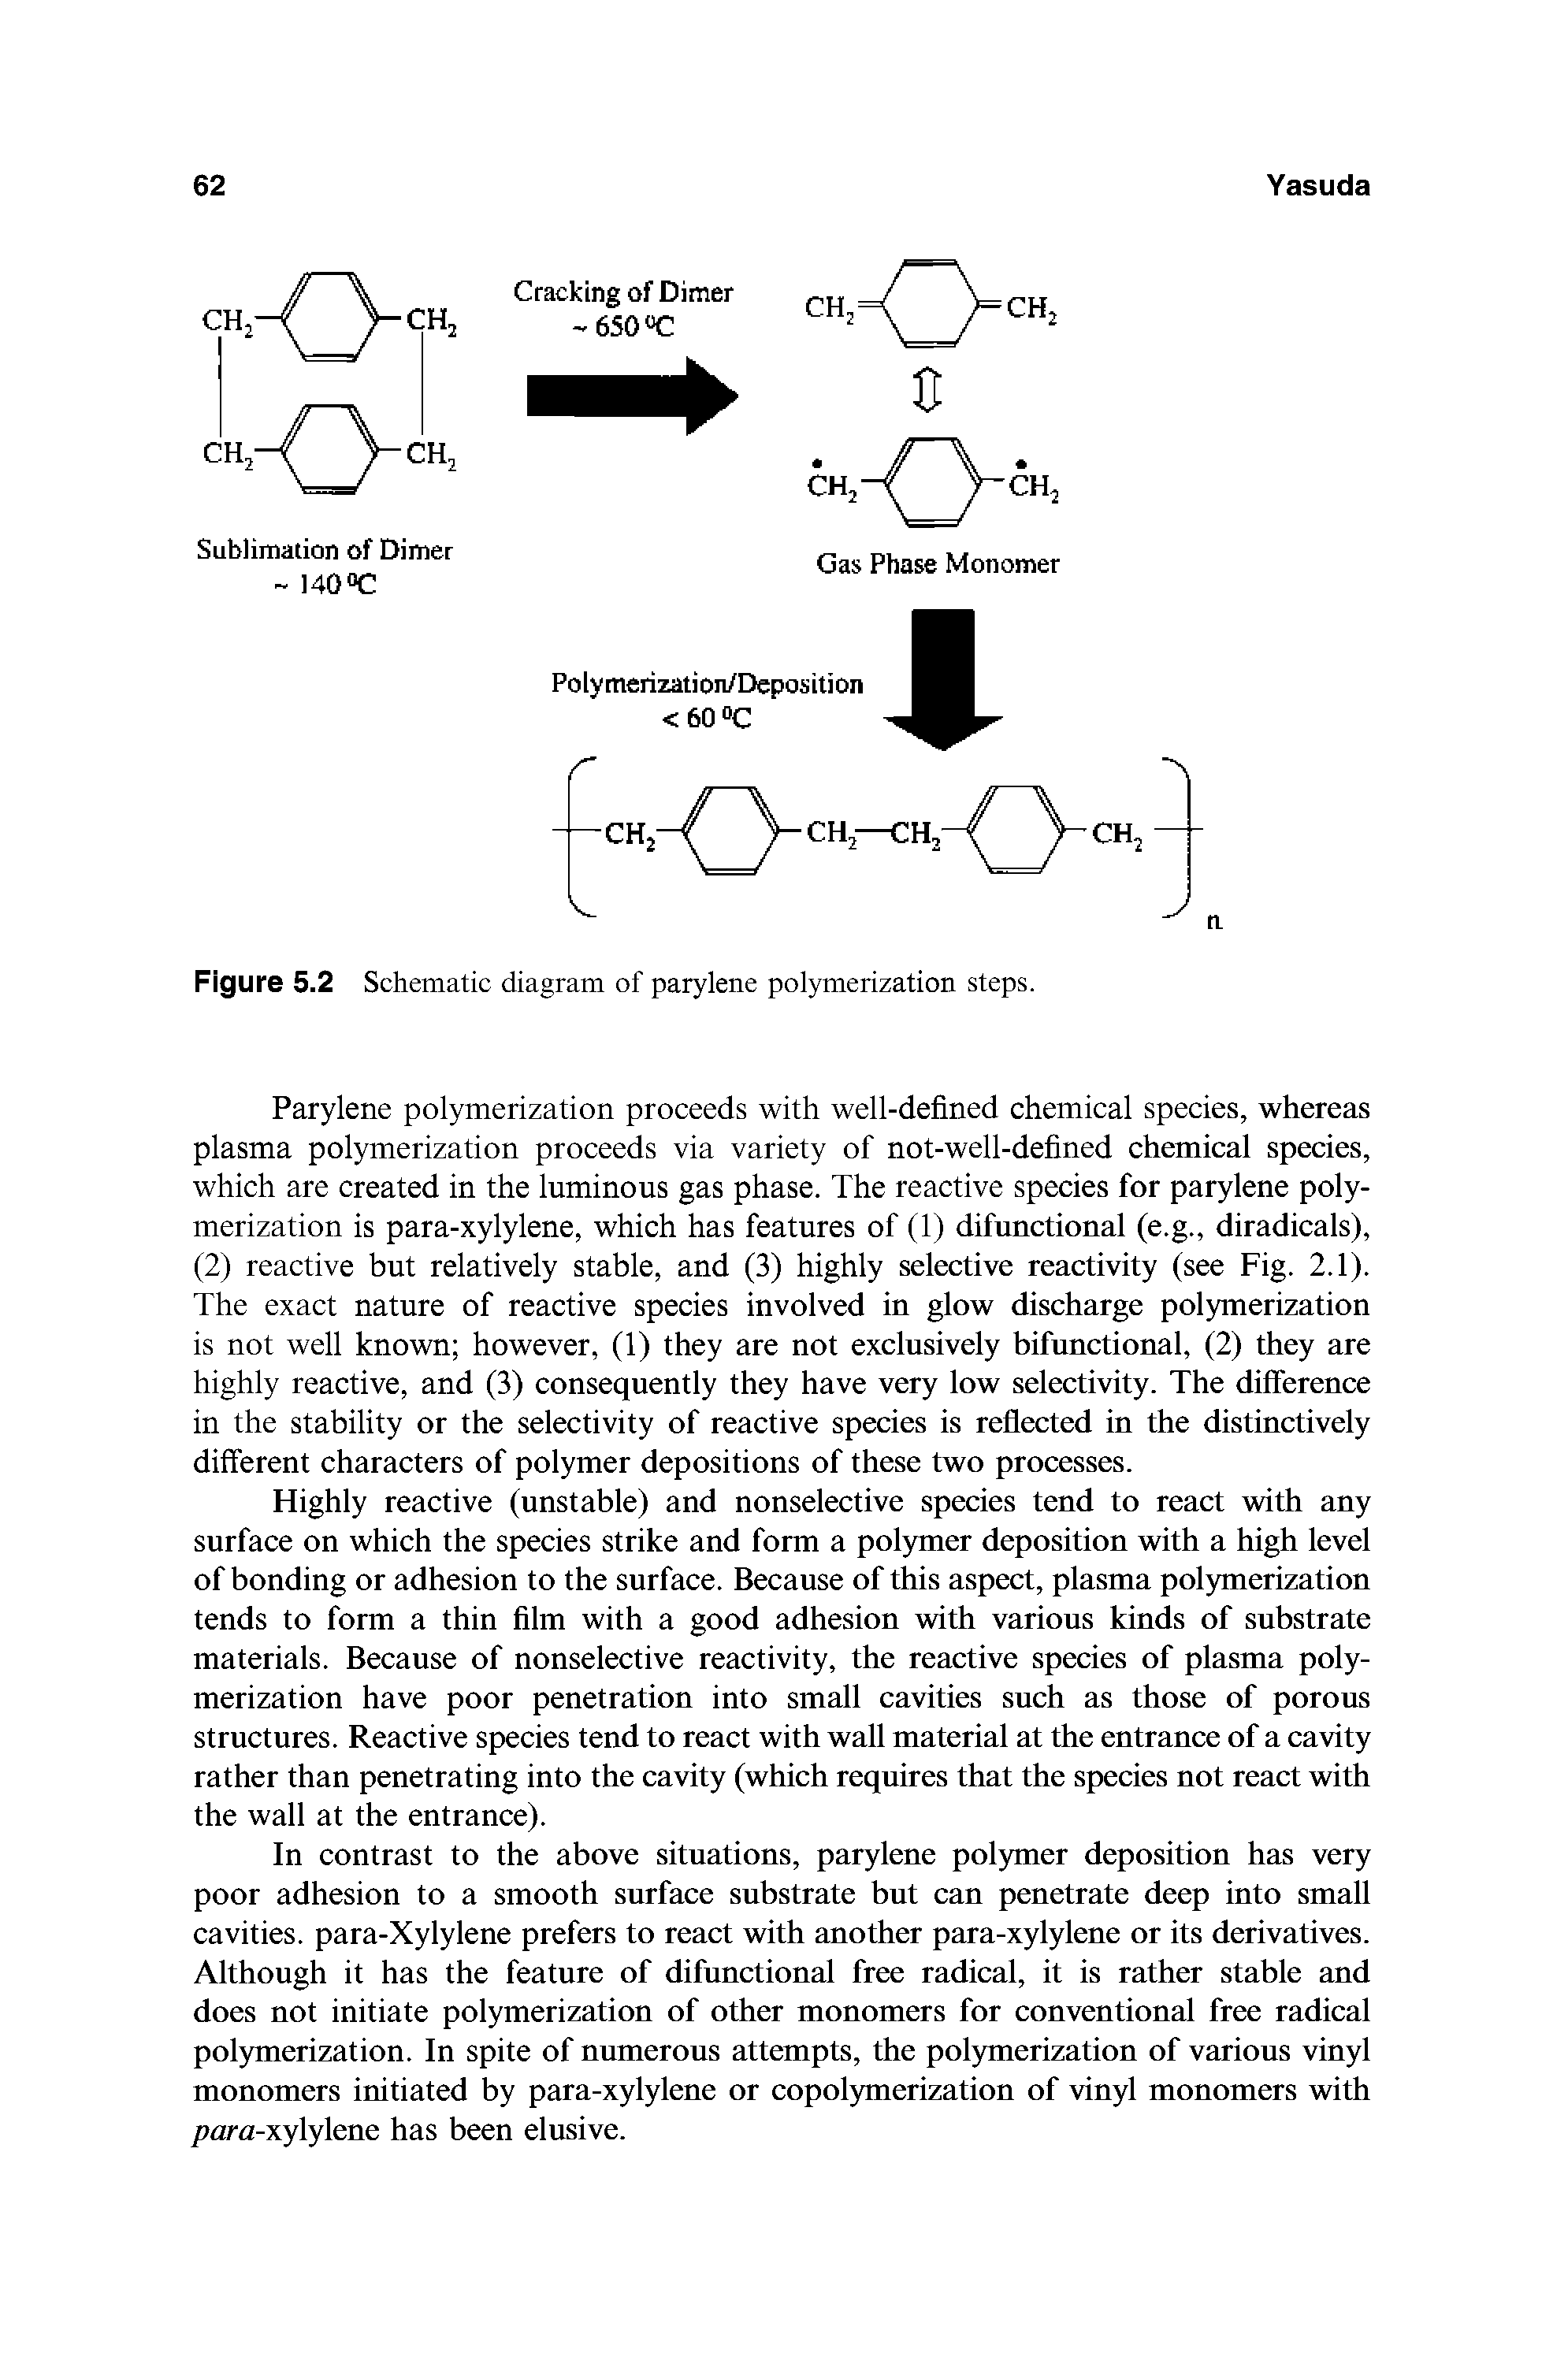 Figure 5.2 Schematic diagram of parylene polymerization steps.